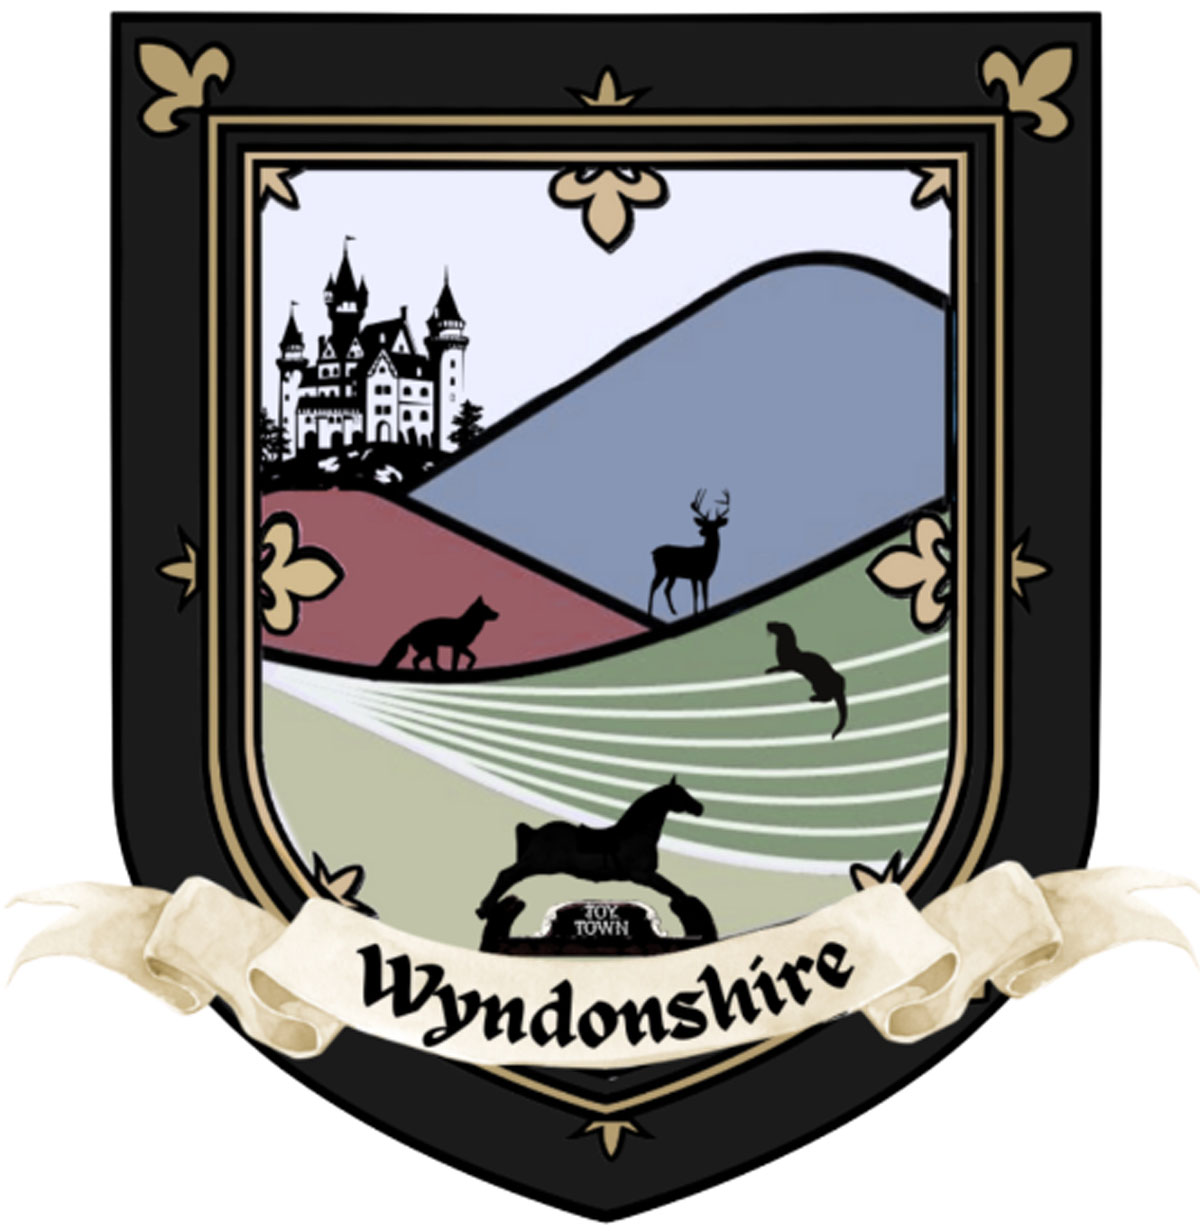 Wyndonshire crest